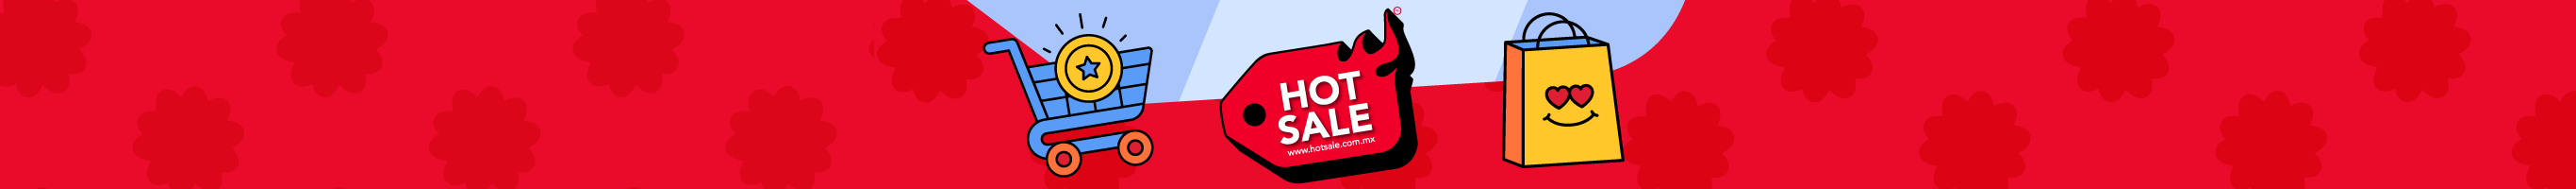 JKP - Hot Sale